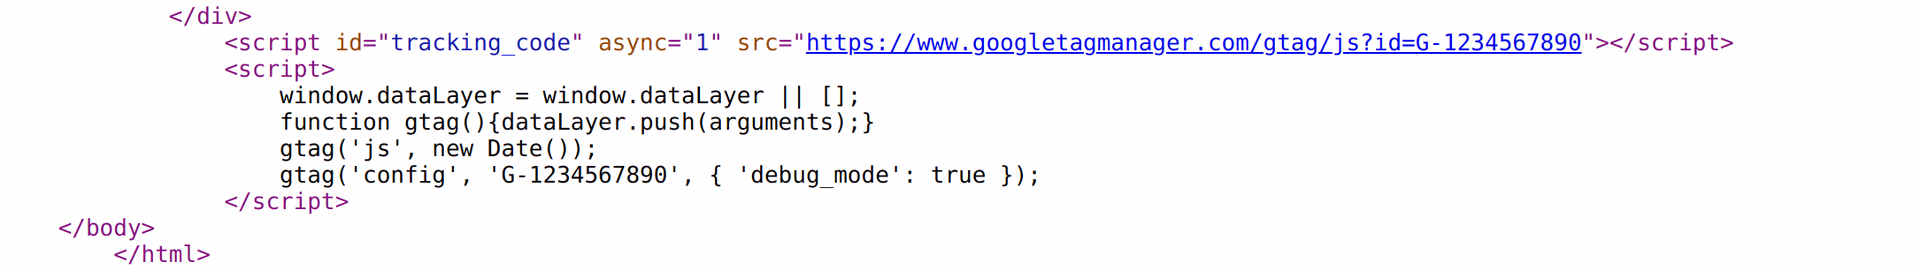 Odoo 12.0 Google Analytics 4 Global Site Tag (gtag.js) global site tag script code